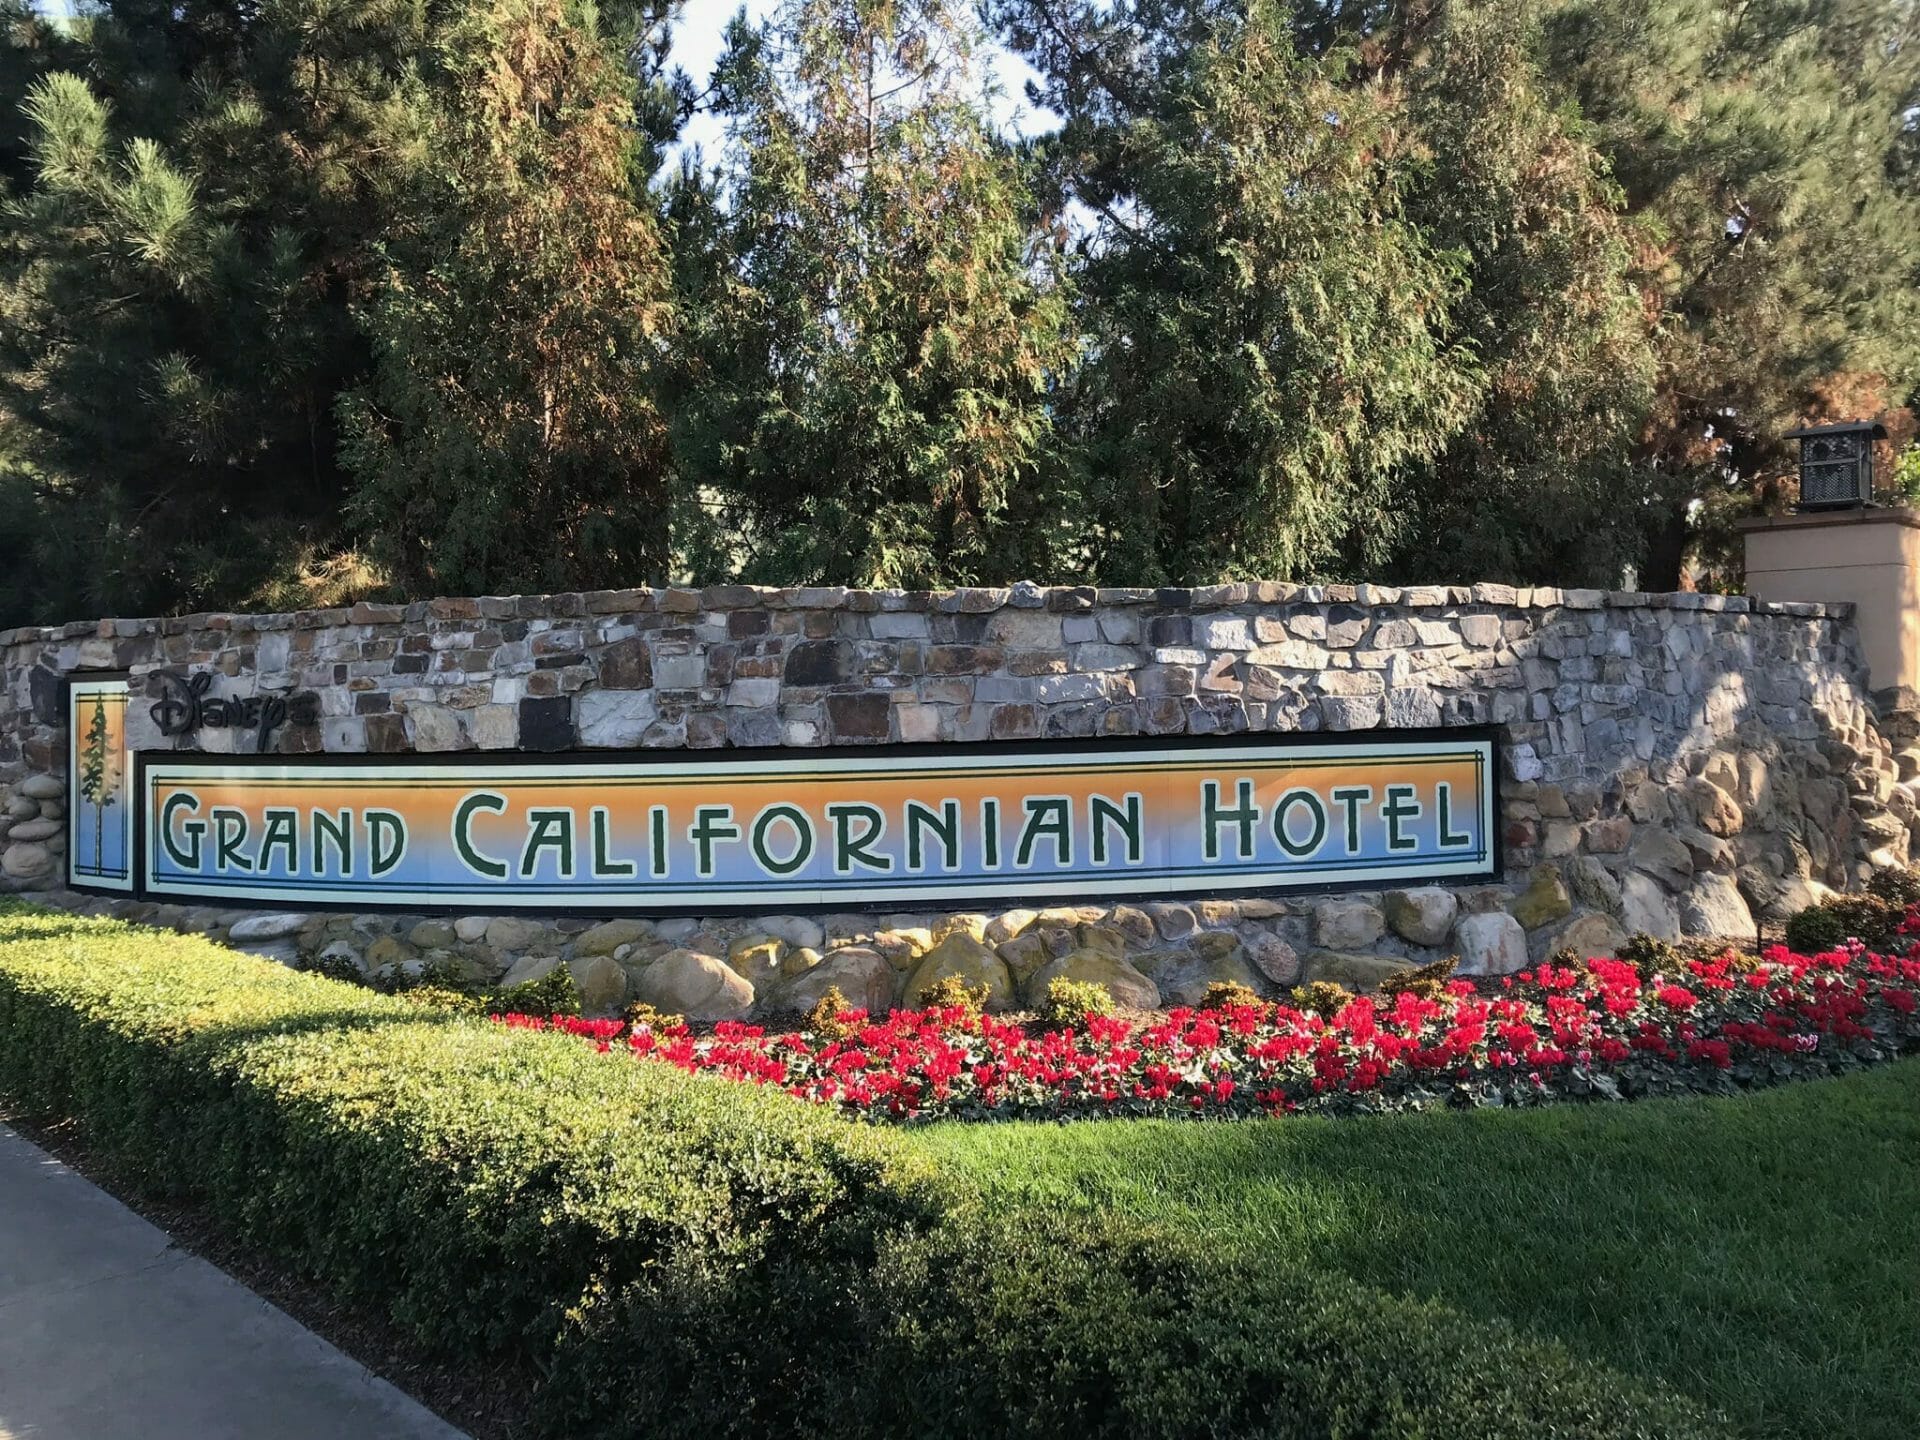 Disney’s Grand Californian Hotel and Spa